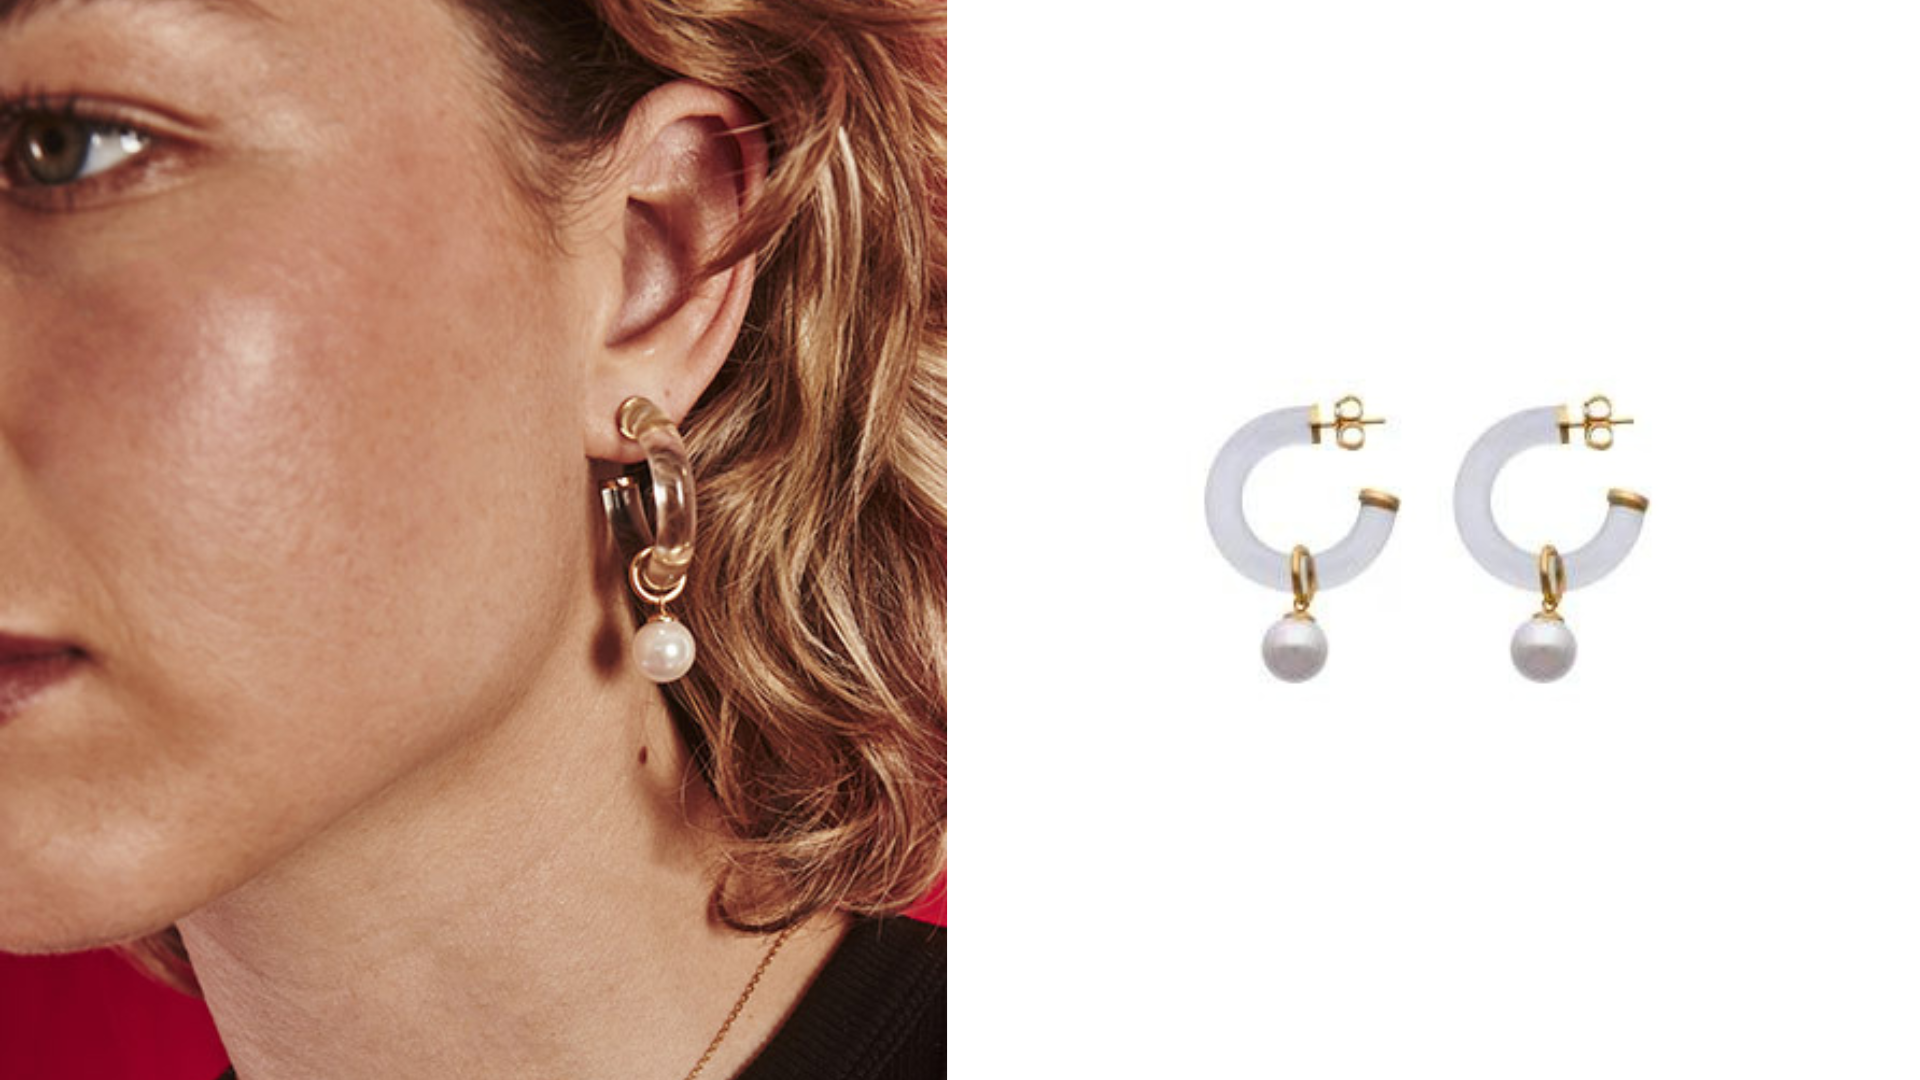 Ayla earrings